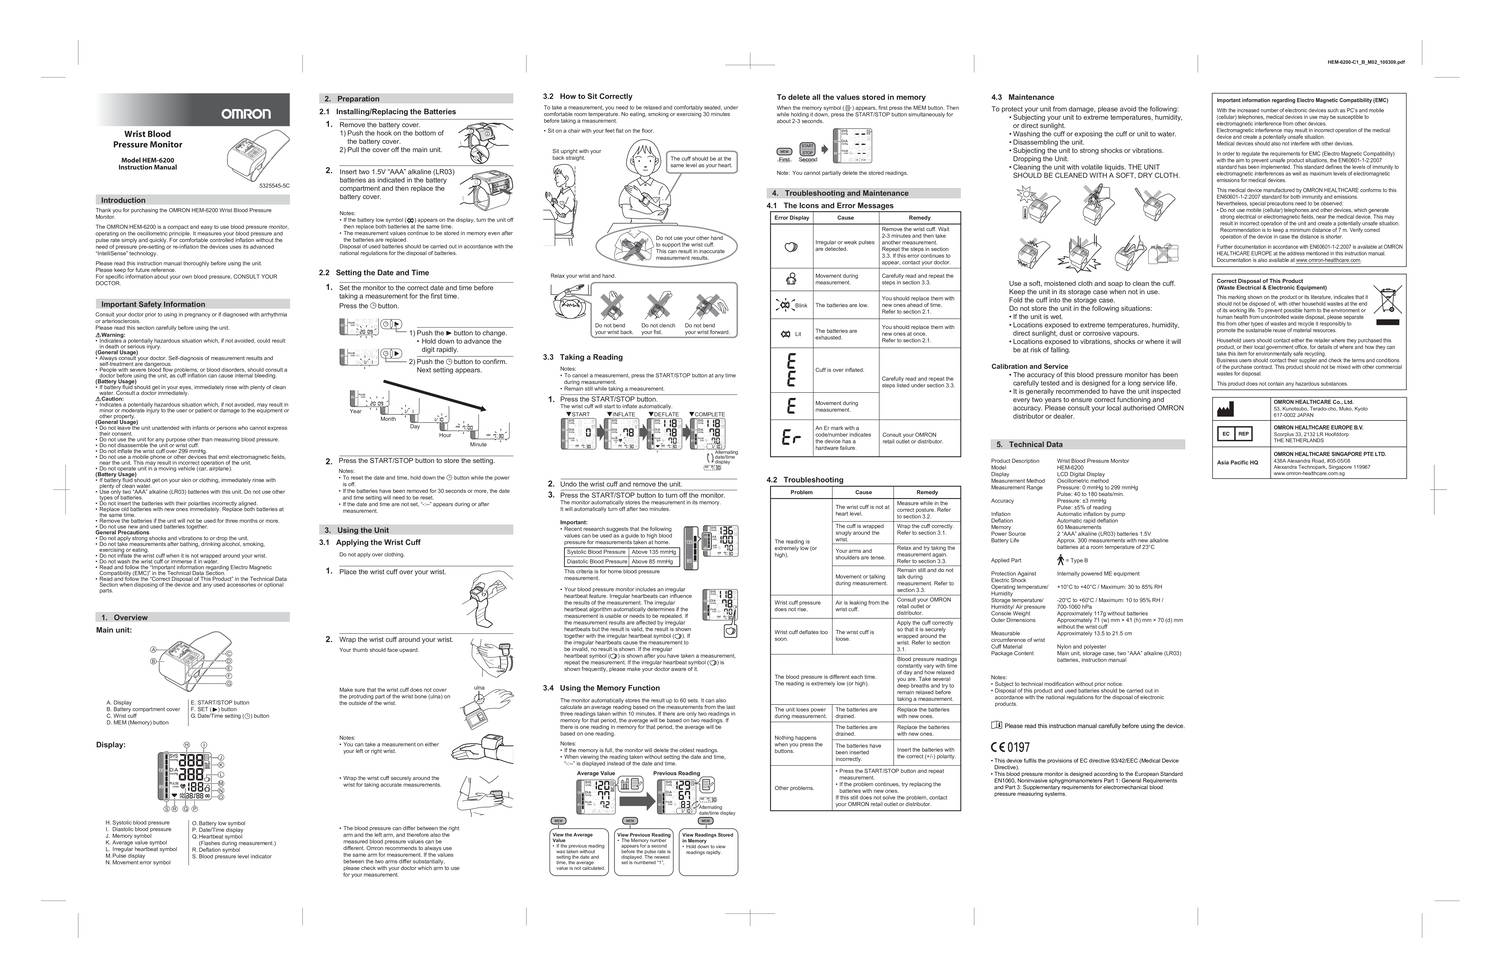 HEM-6200 (Manual).pdf | DocDroid